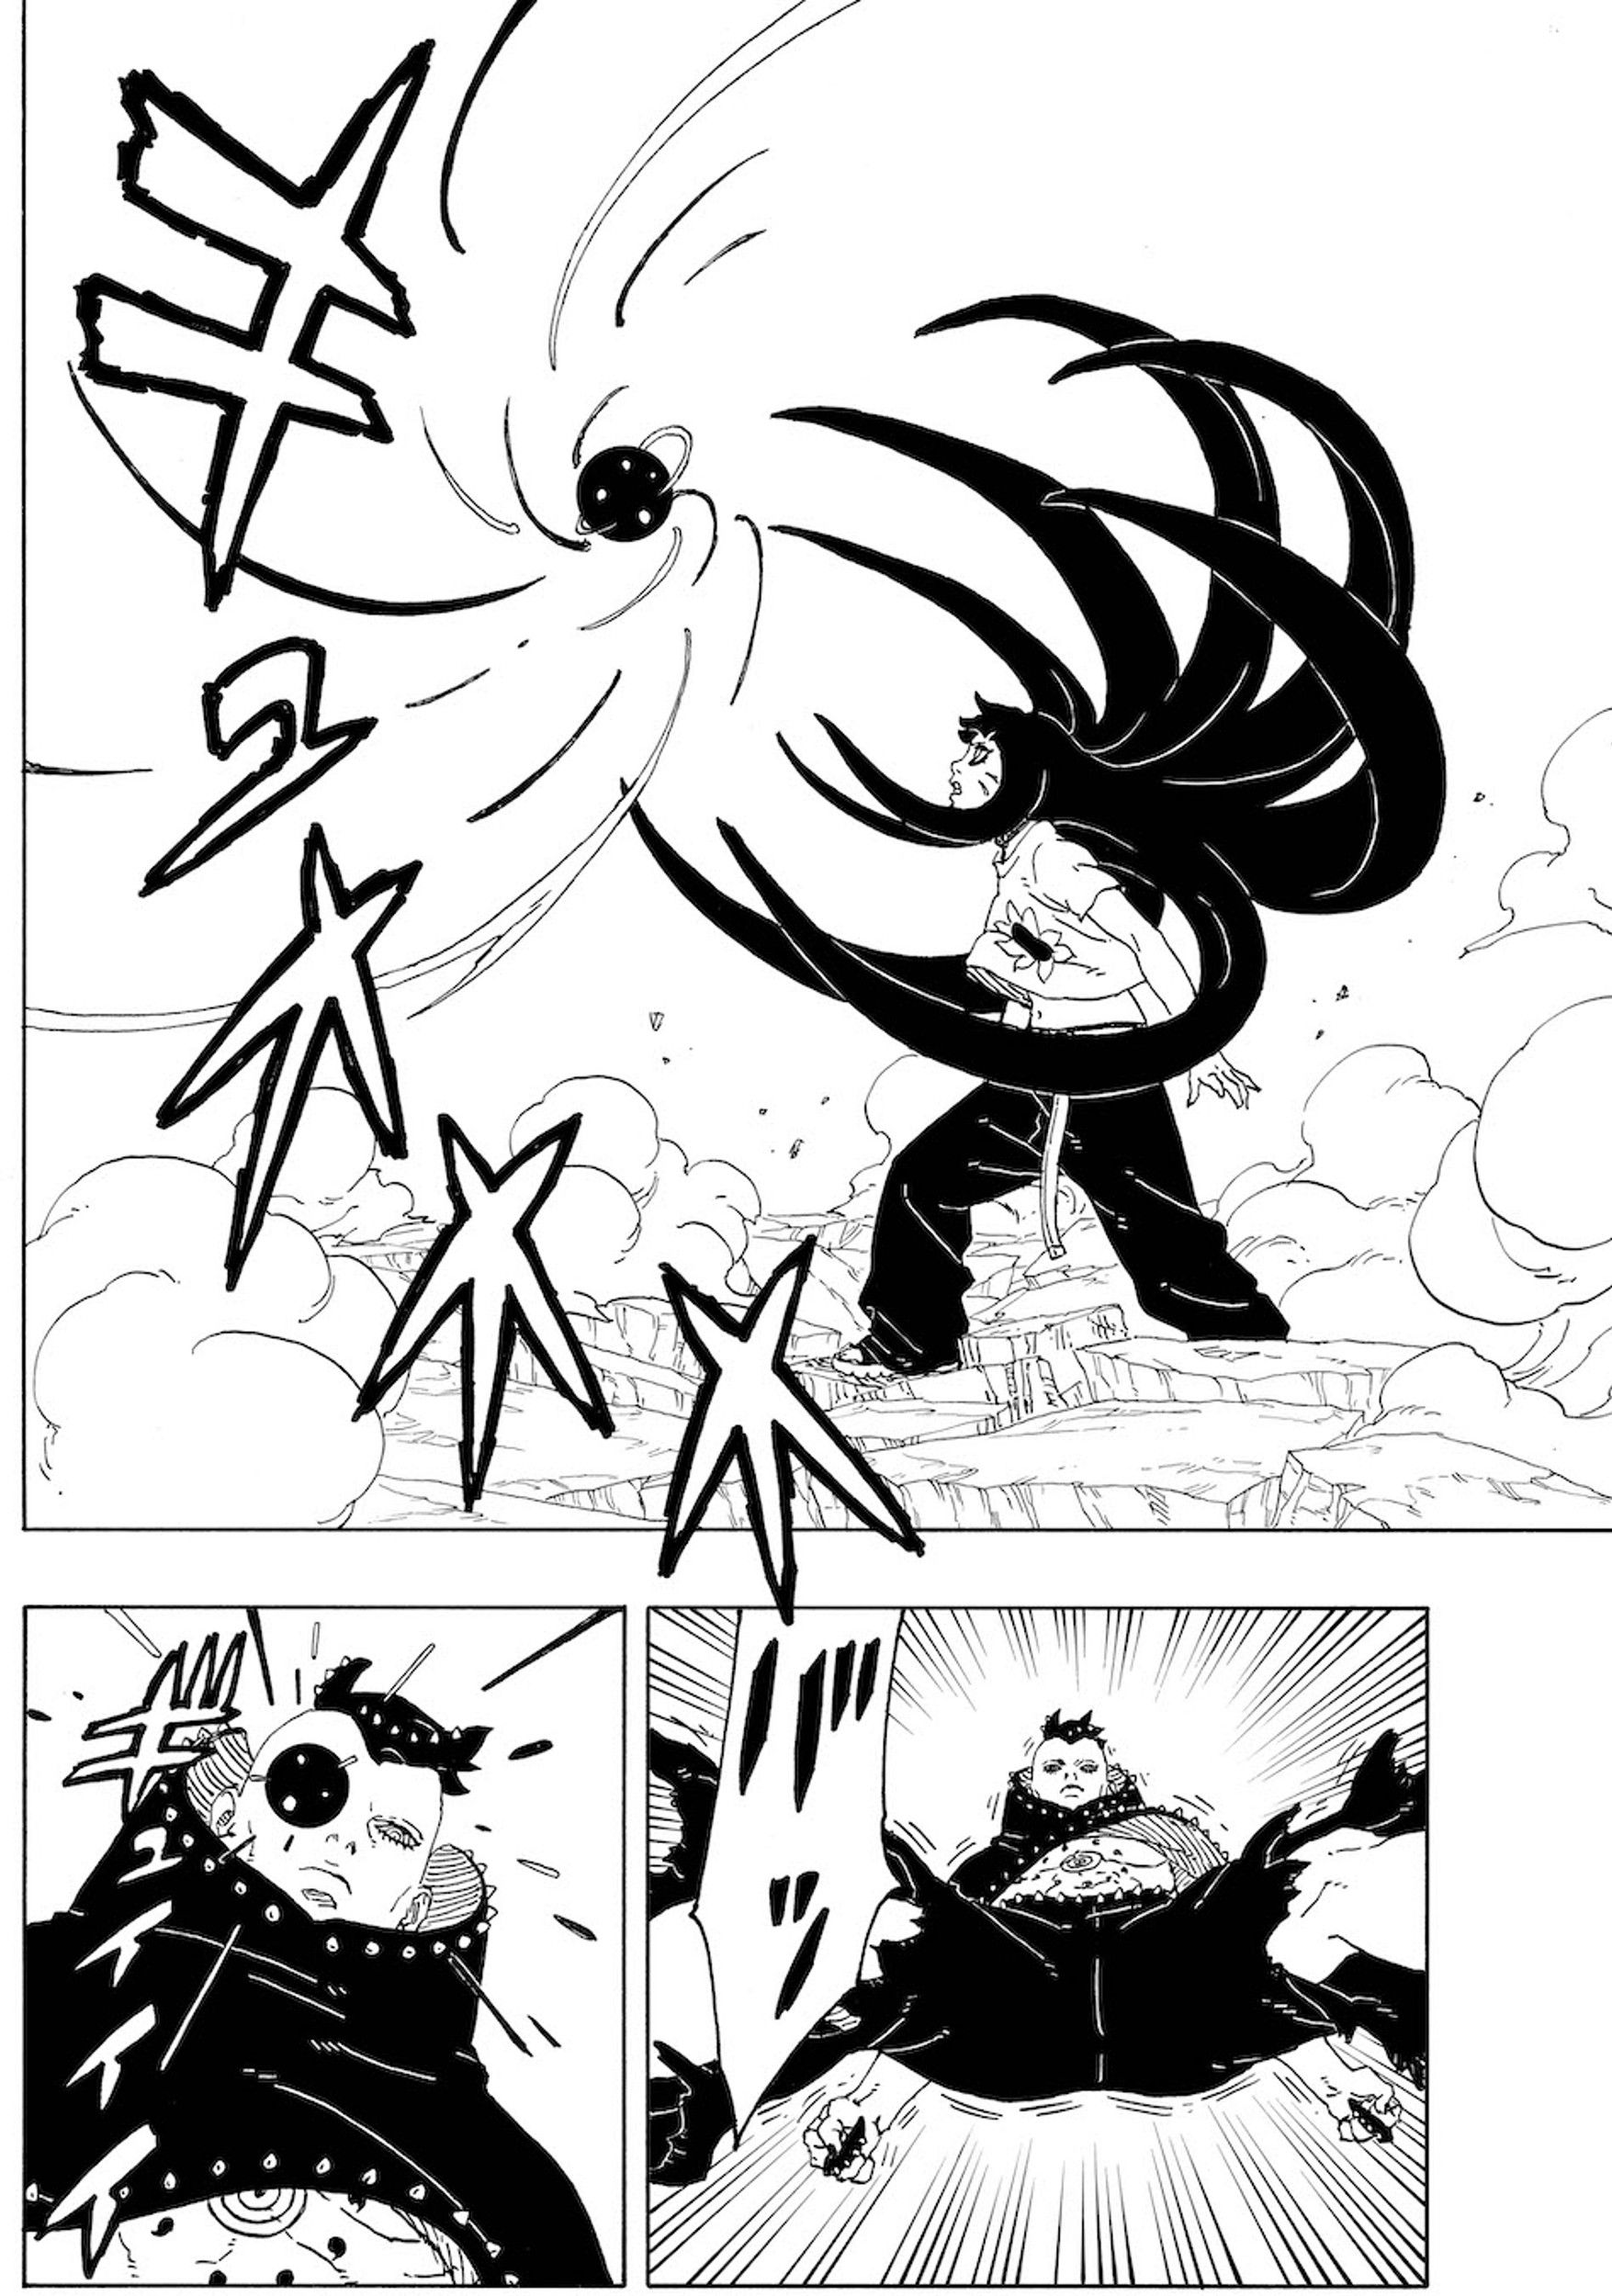 Manga panel of Himawari launching a Tailed Beast bomb on Jura